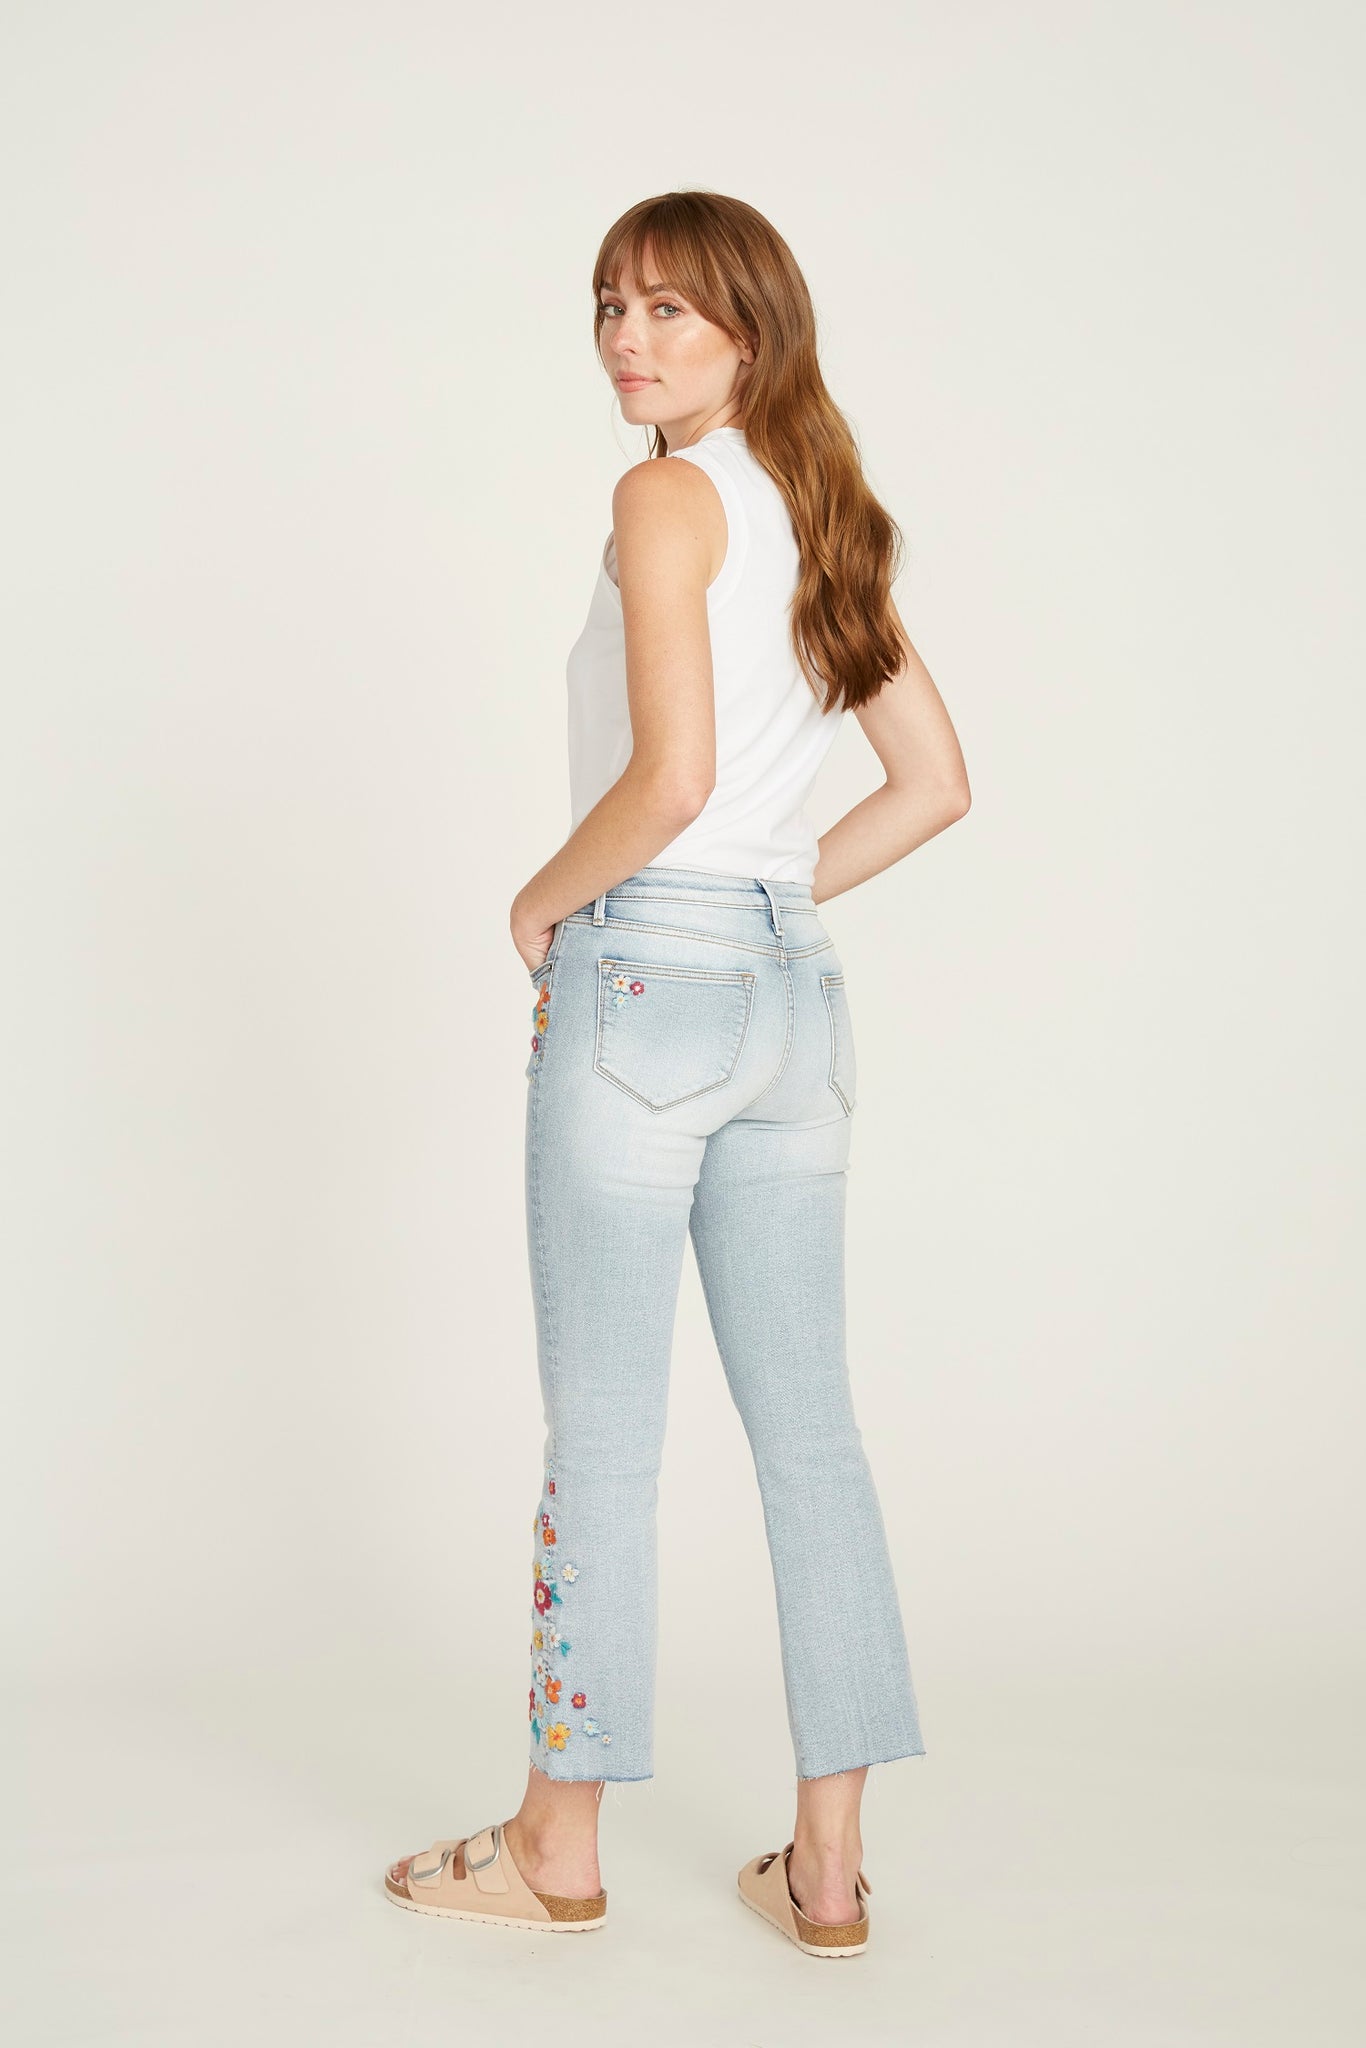 Roxy Multi Mod Crop Jean